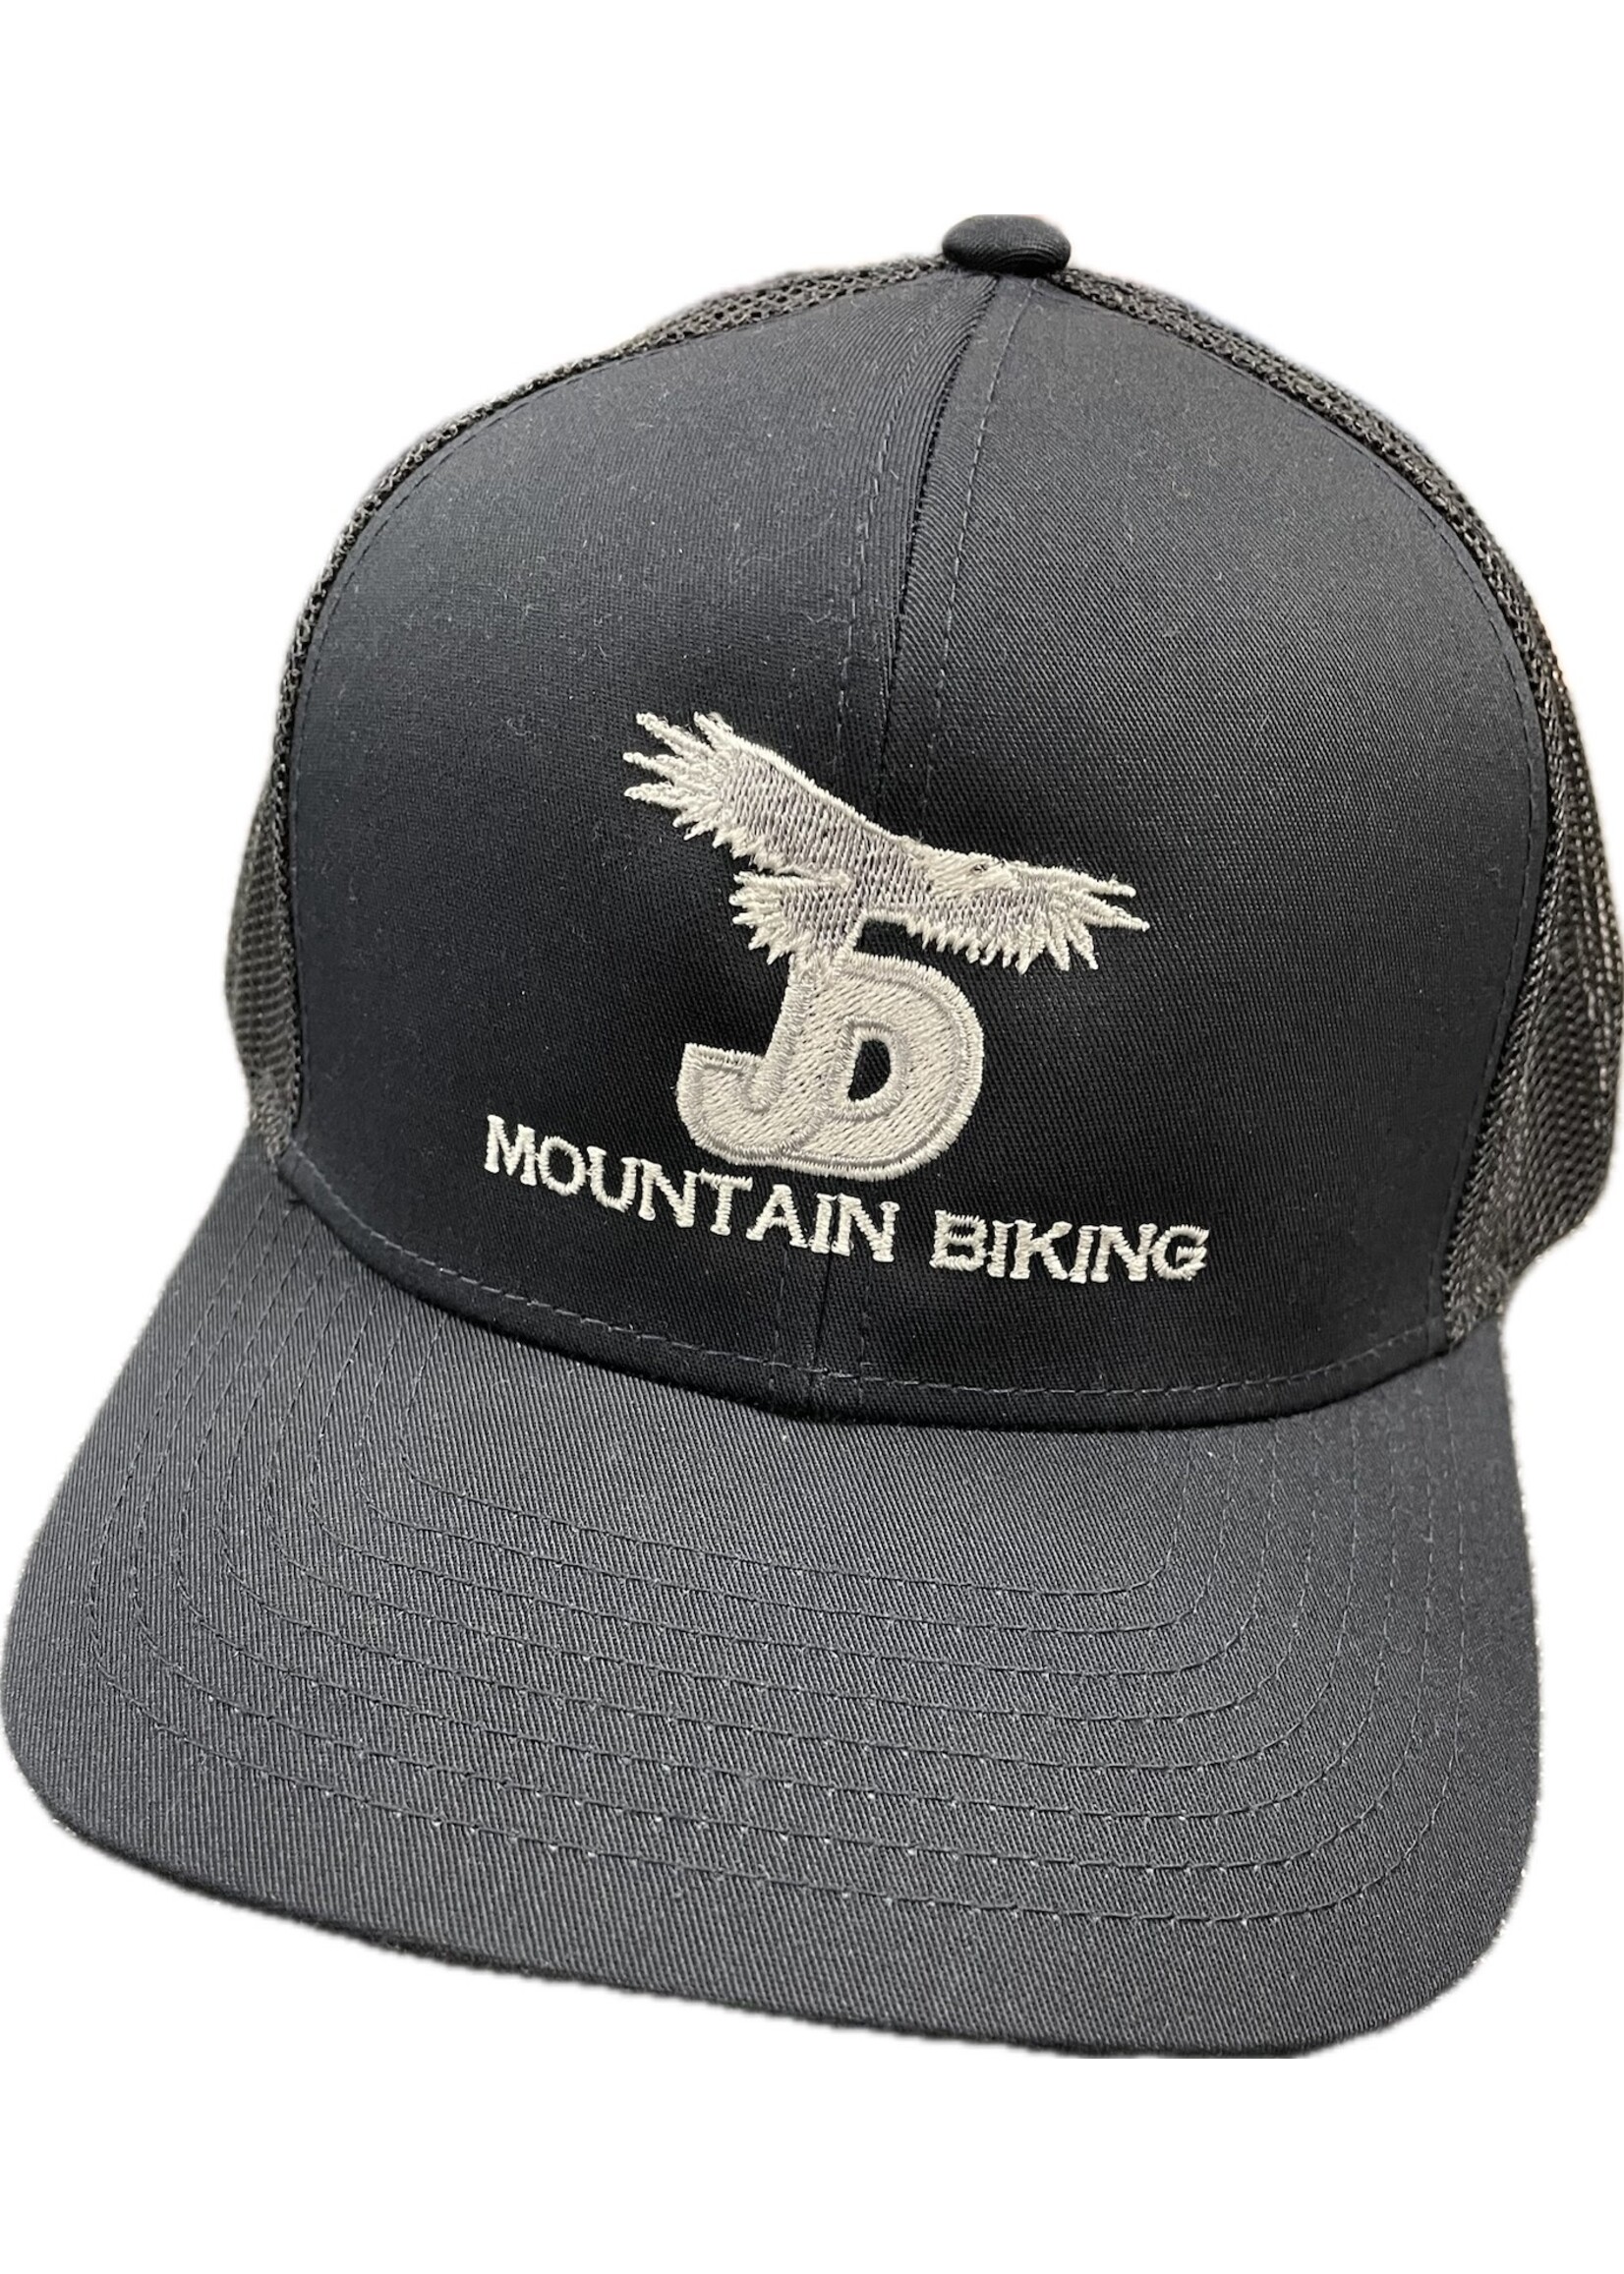 NON-UNIFORM JD Eagle Mountain Biking Trucker Hat